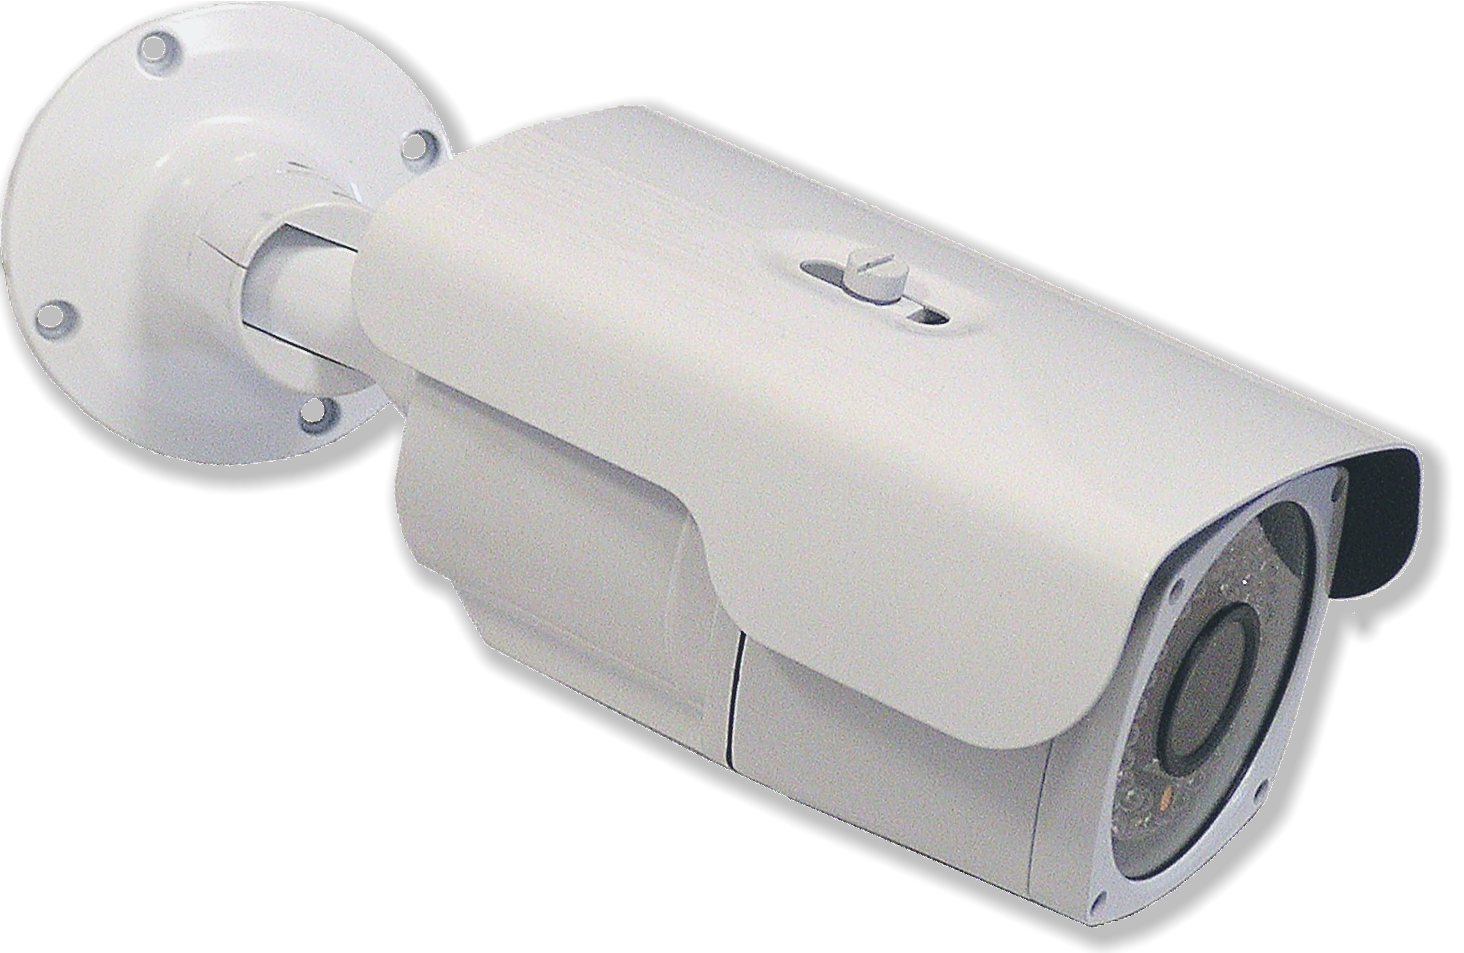 DN-H298D-2812: Уличная AHD-M камера видеонаблюдения 720P. Сенсор SONY Exmor NIR